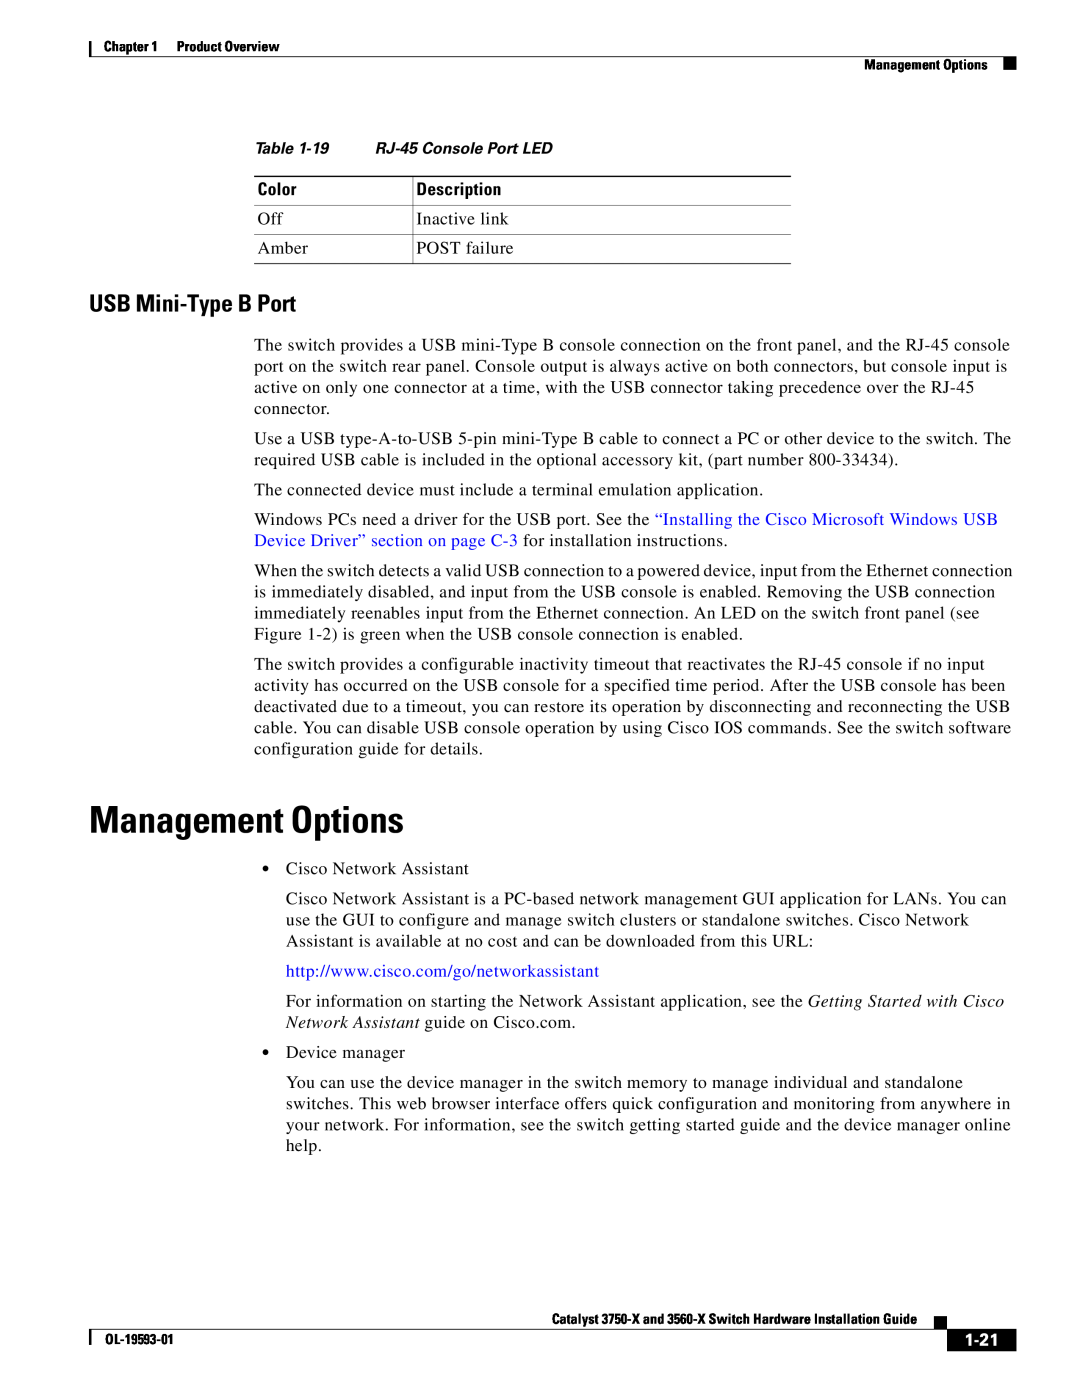 Cisco Systems 3560-X, 3750-X manual Management Options, USB Mini-Type B Port, 1-21 